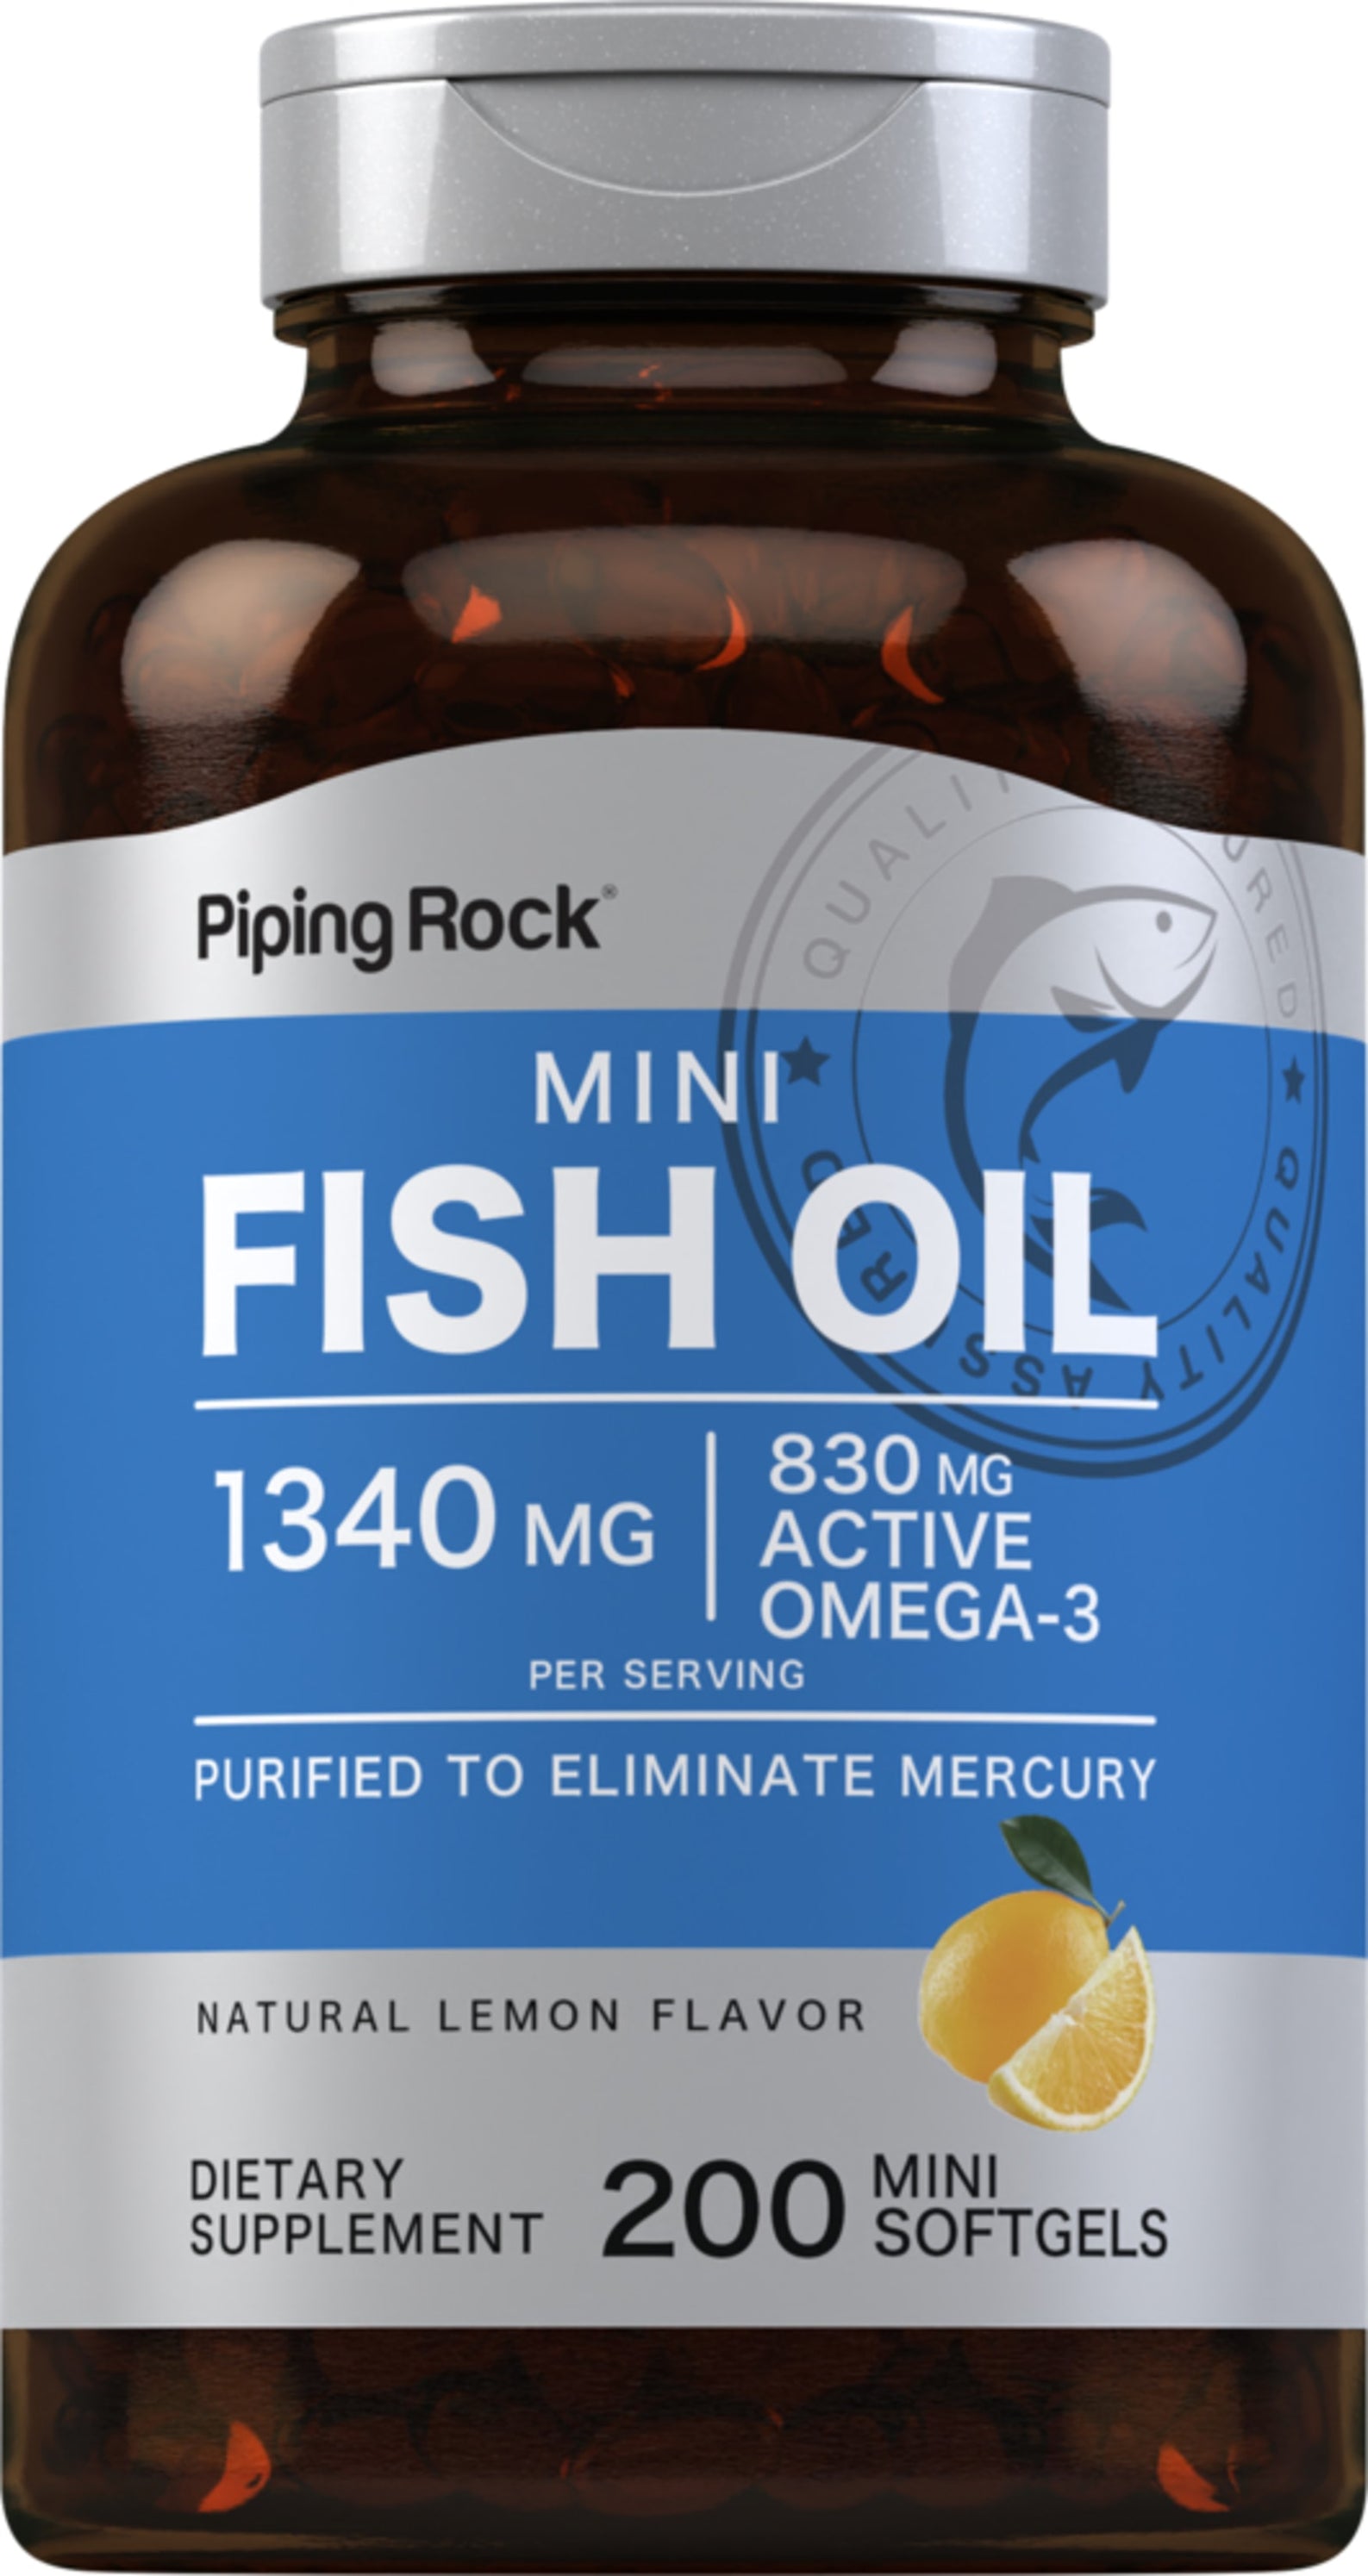 Mini Omega-3 Fish Oil Lemon Flavor, 1340 mg (per serving), 200 Mini Softgels